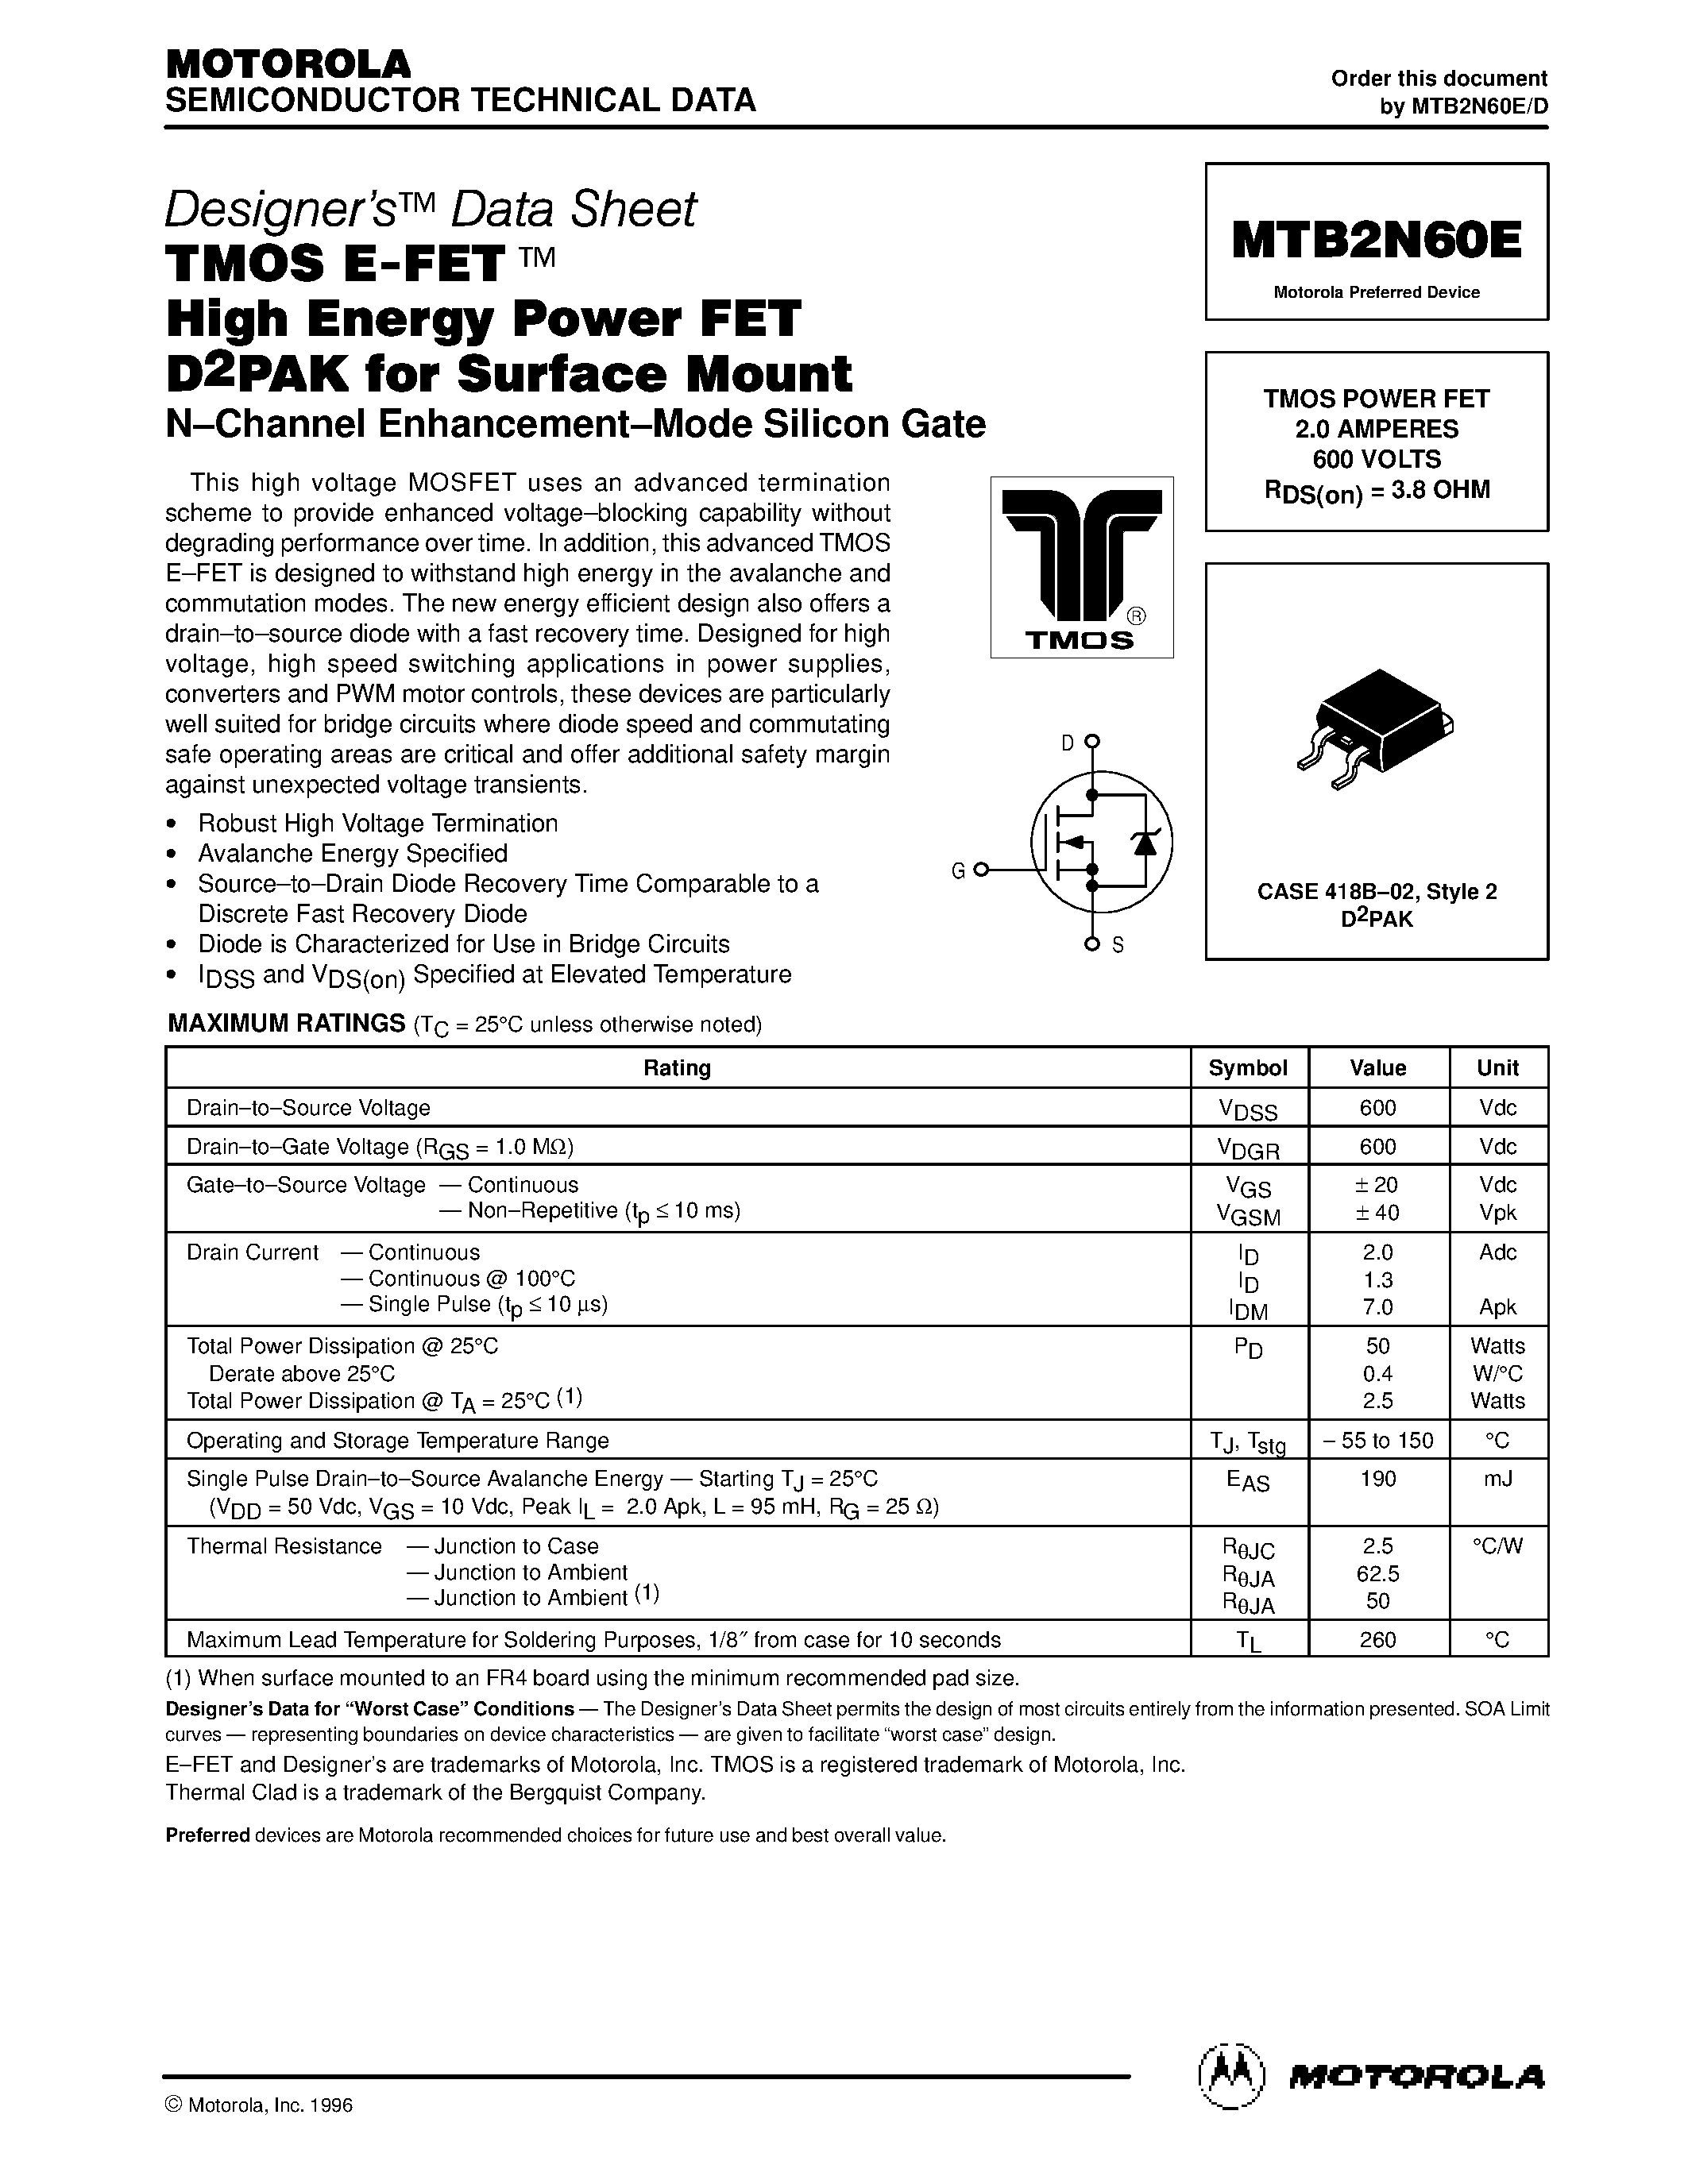 Даташит MTB2N60E - TMOS POWER FET 2.0 AMPERES 600 VOLTS страница 1